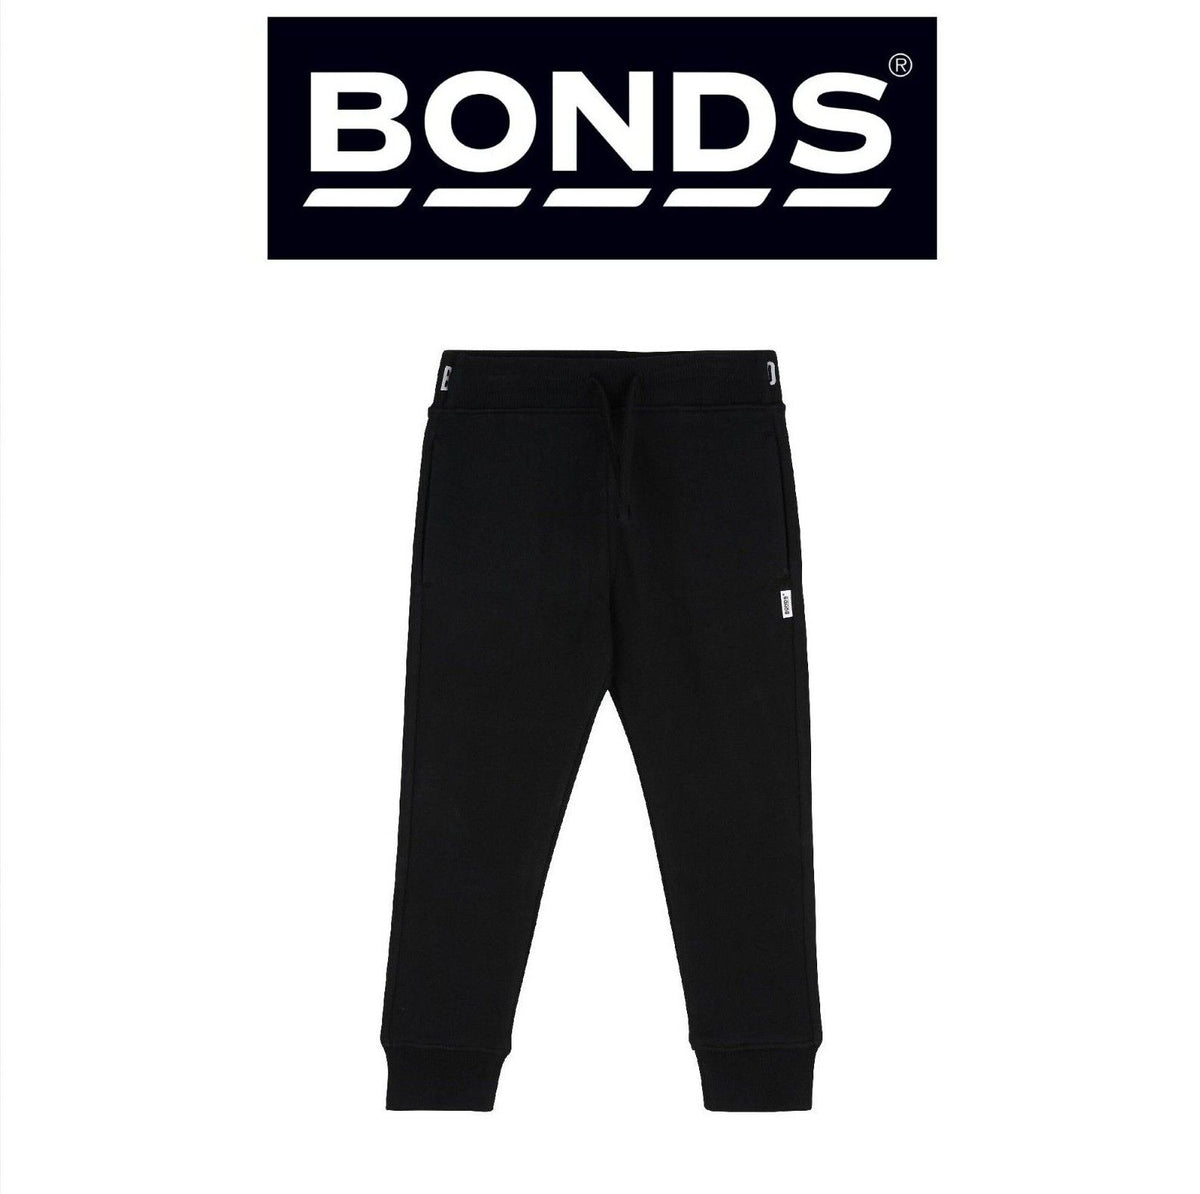 Bonds Kids Fleece Trackie Pants Roomy Drop Crotch Styling & Tapered Legs KVRJK